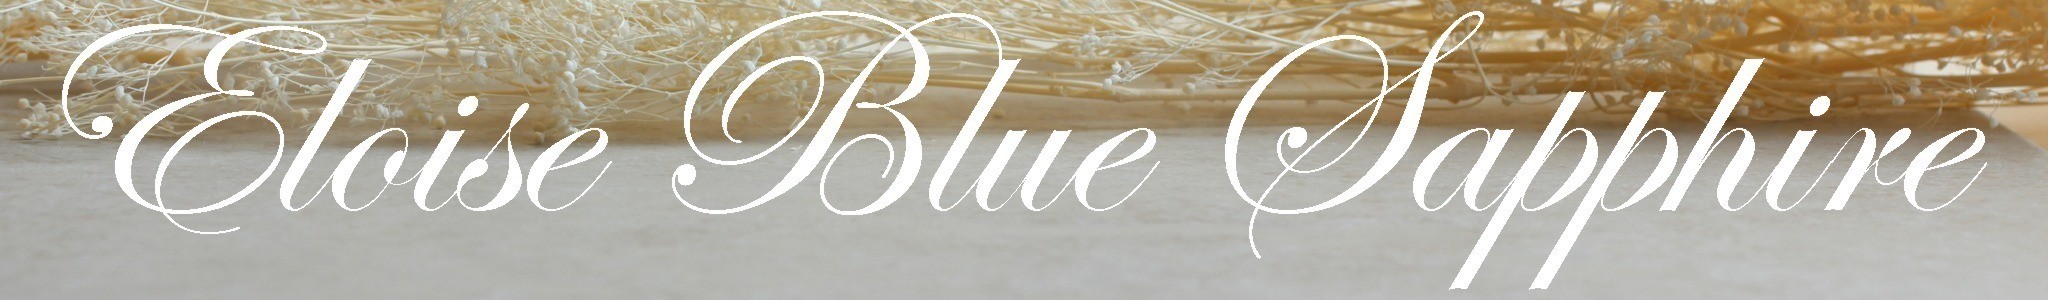 Eloise Blue Sapphire Product Line Image